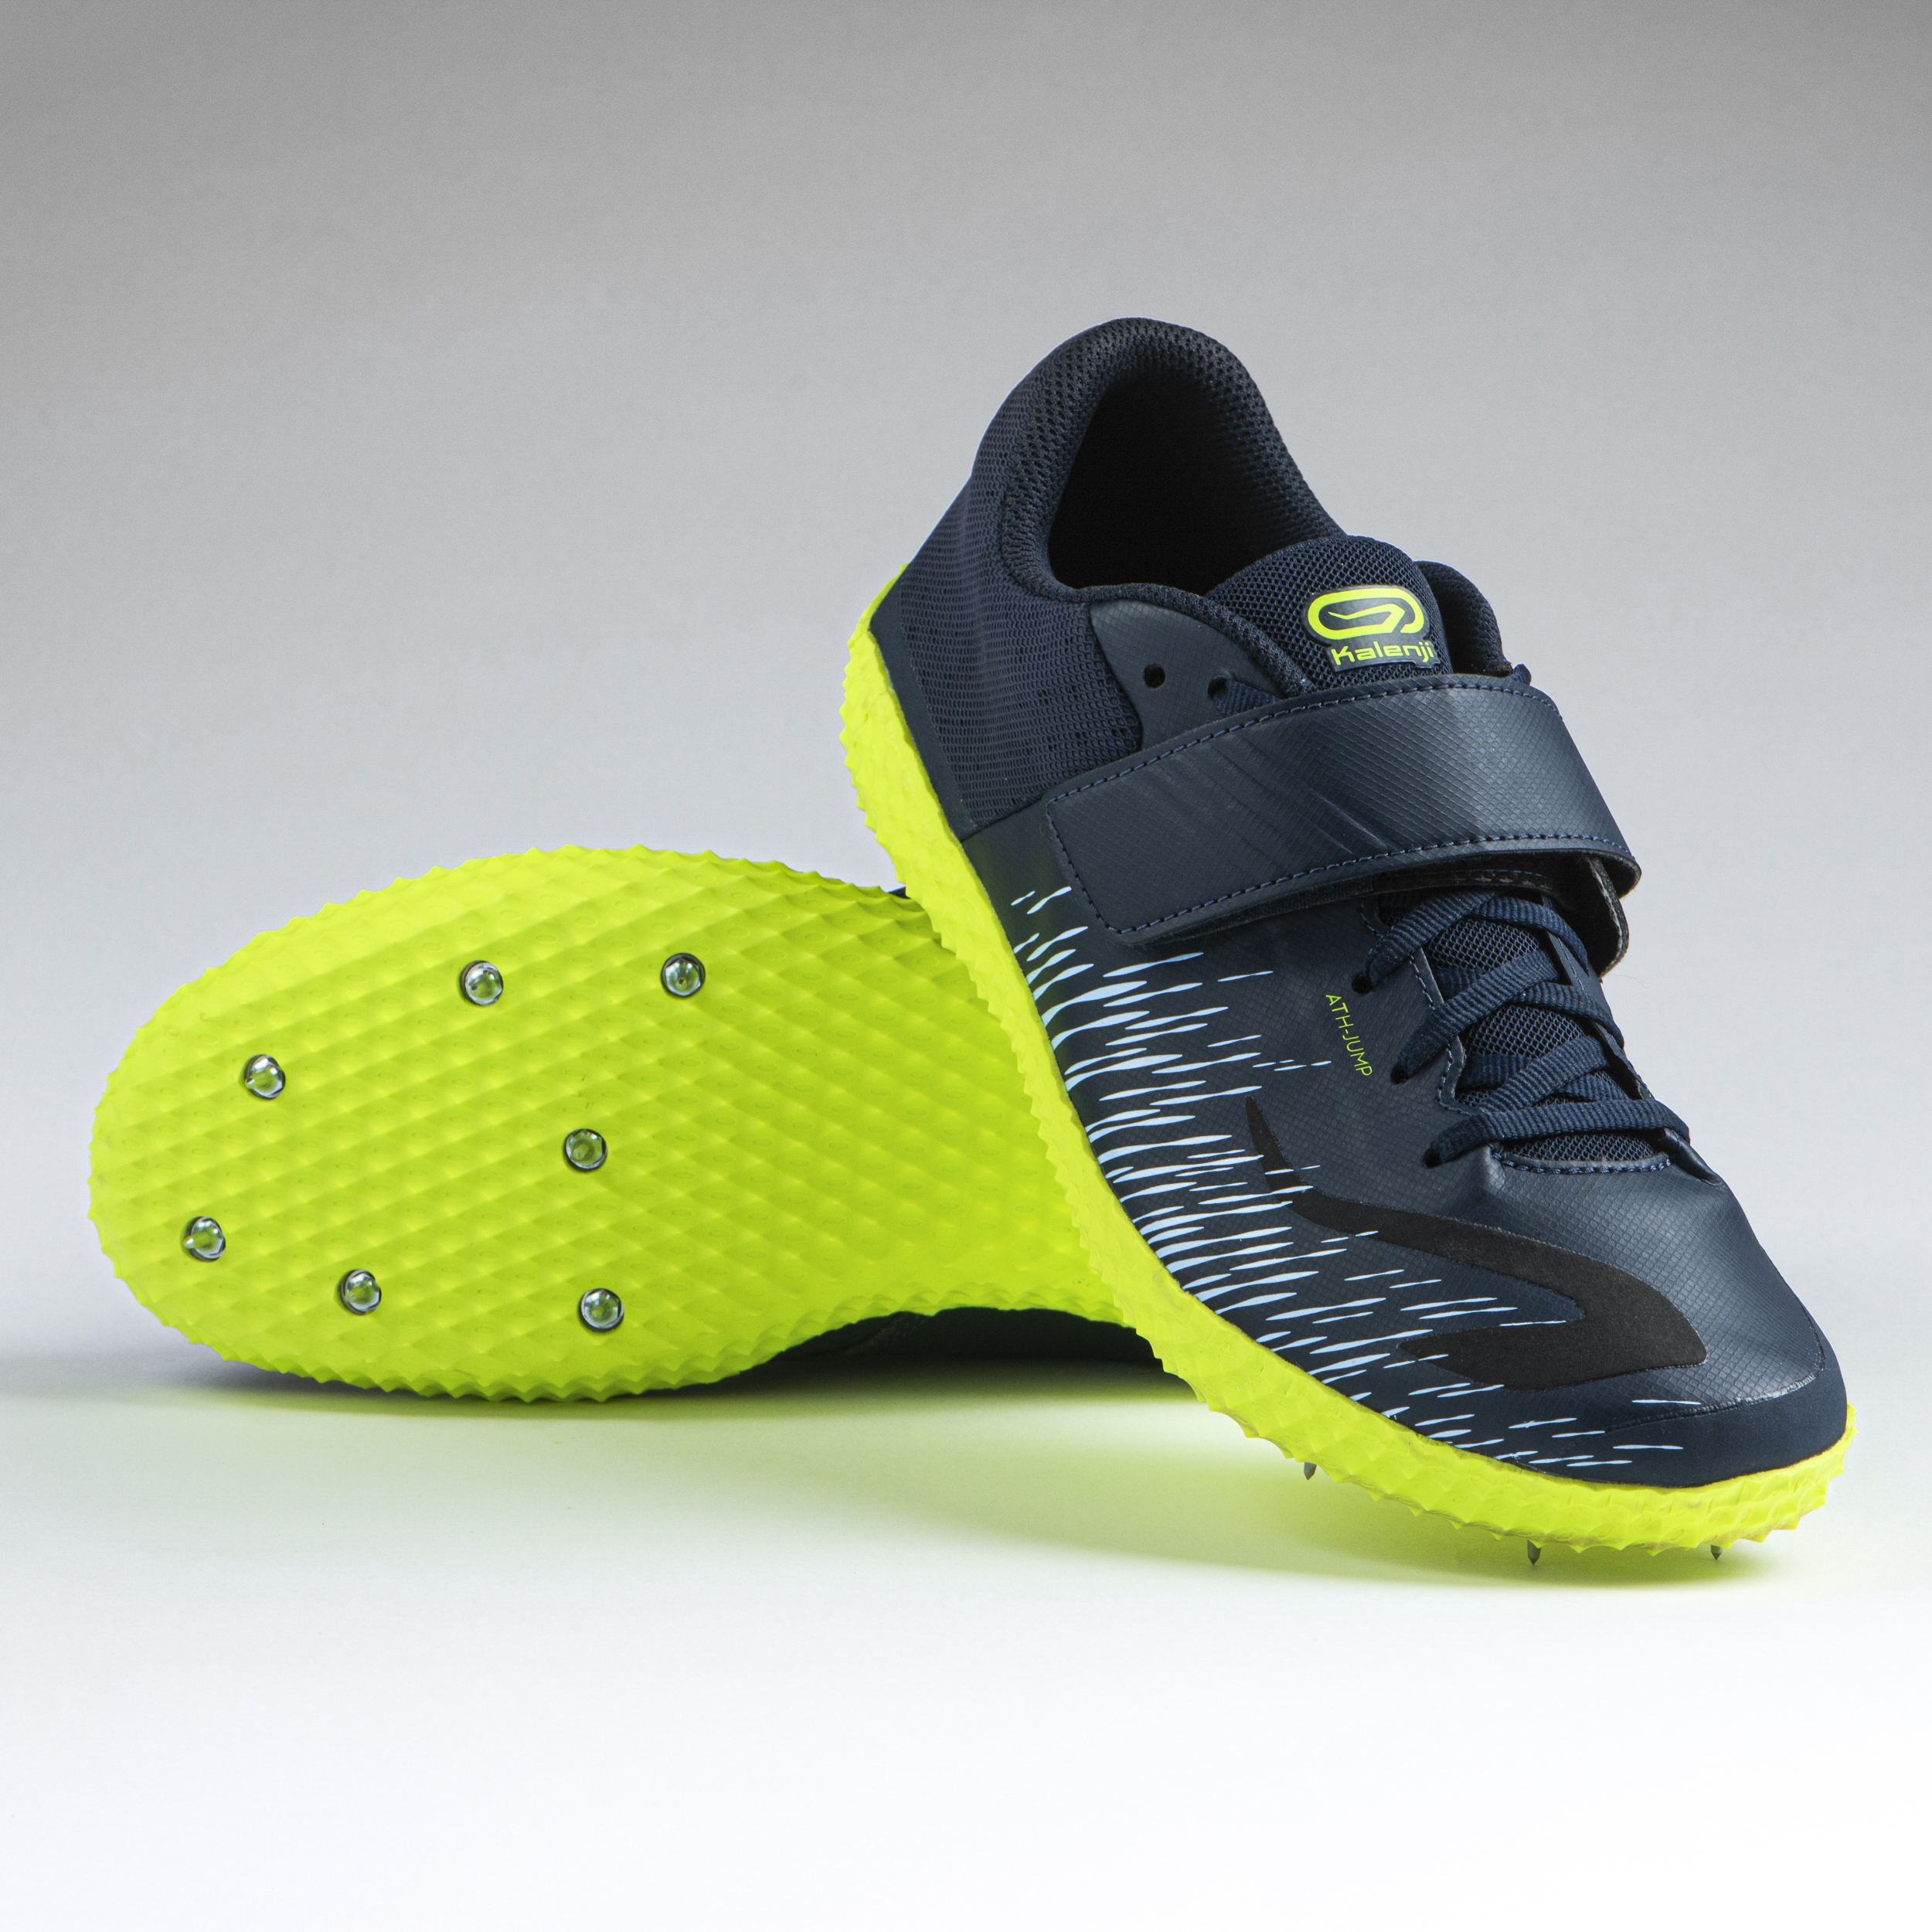 Chaussures à pointes d'athlétisme Kalenji : test outdoor